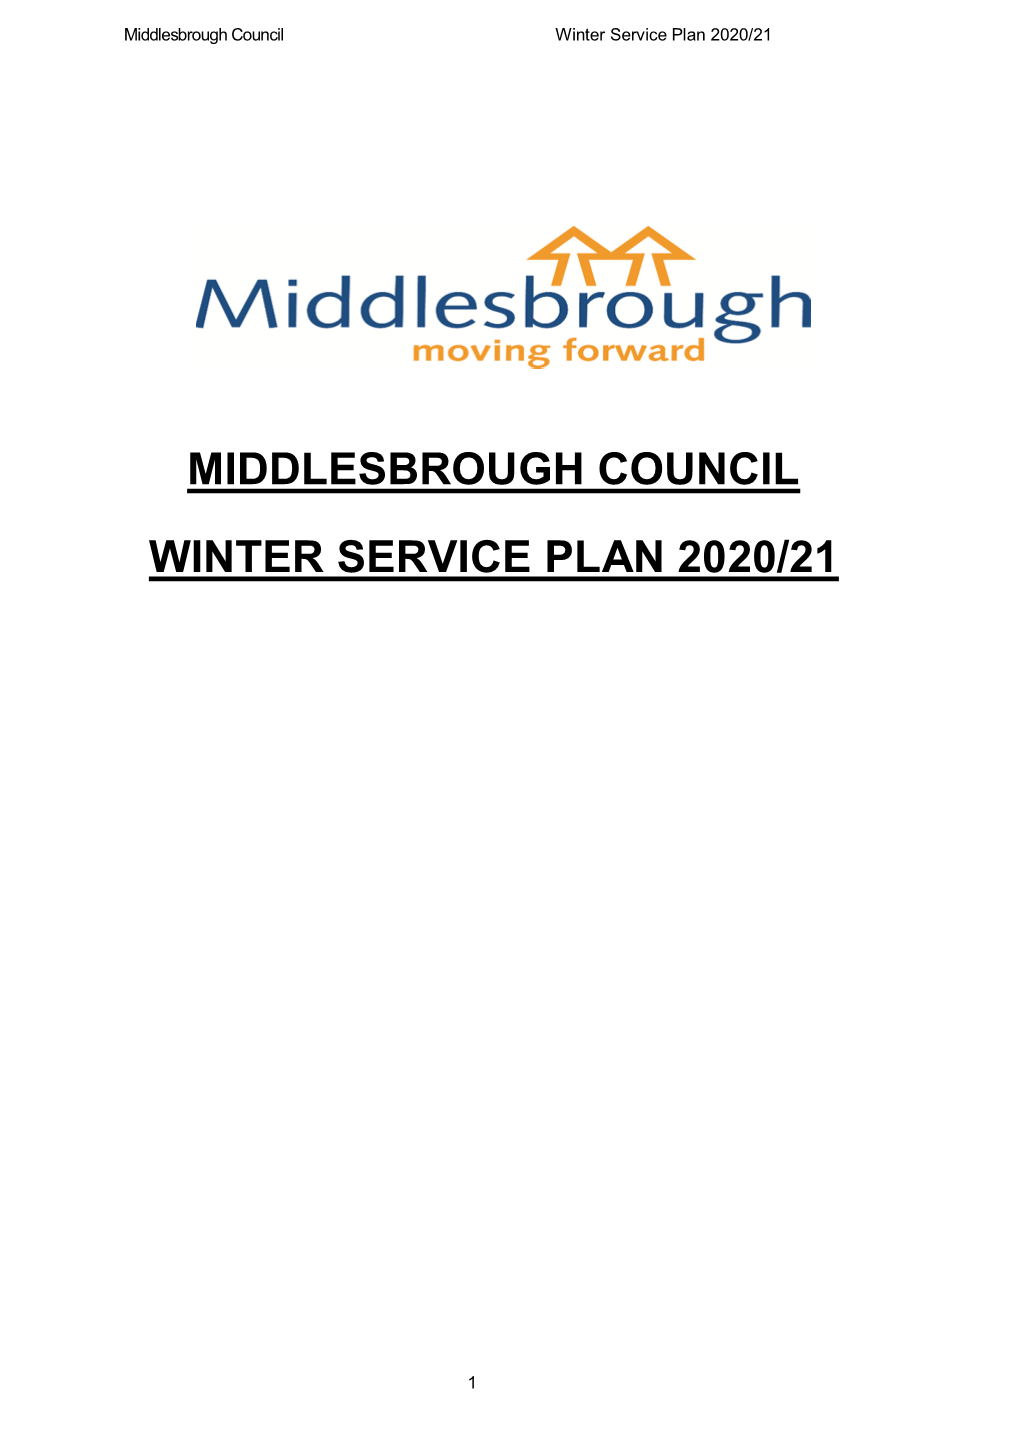 Winter Maintenance Plan (2020-2021